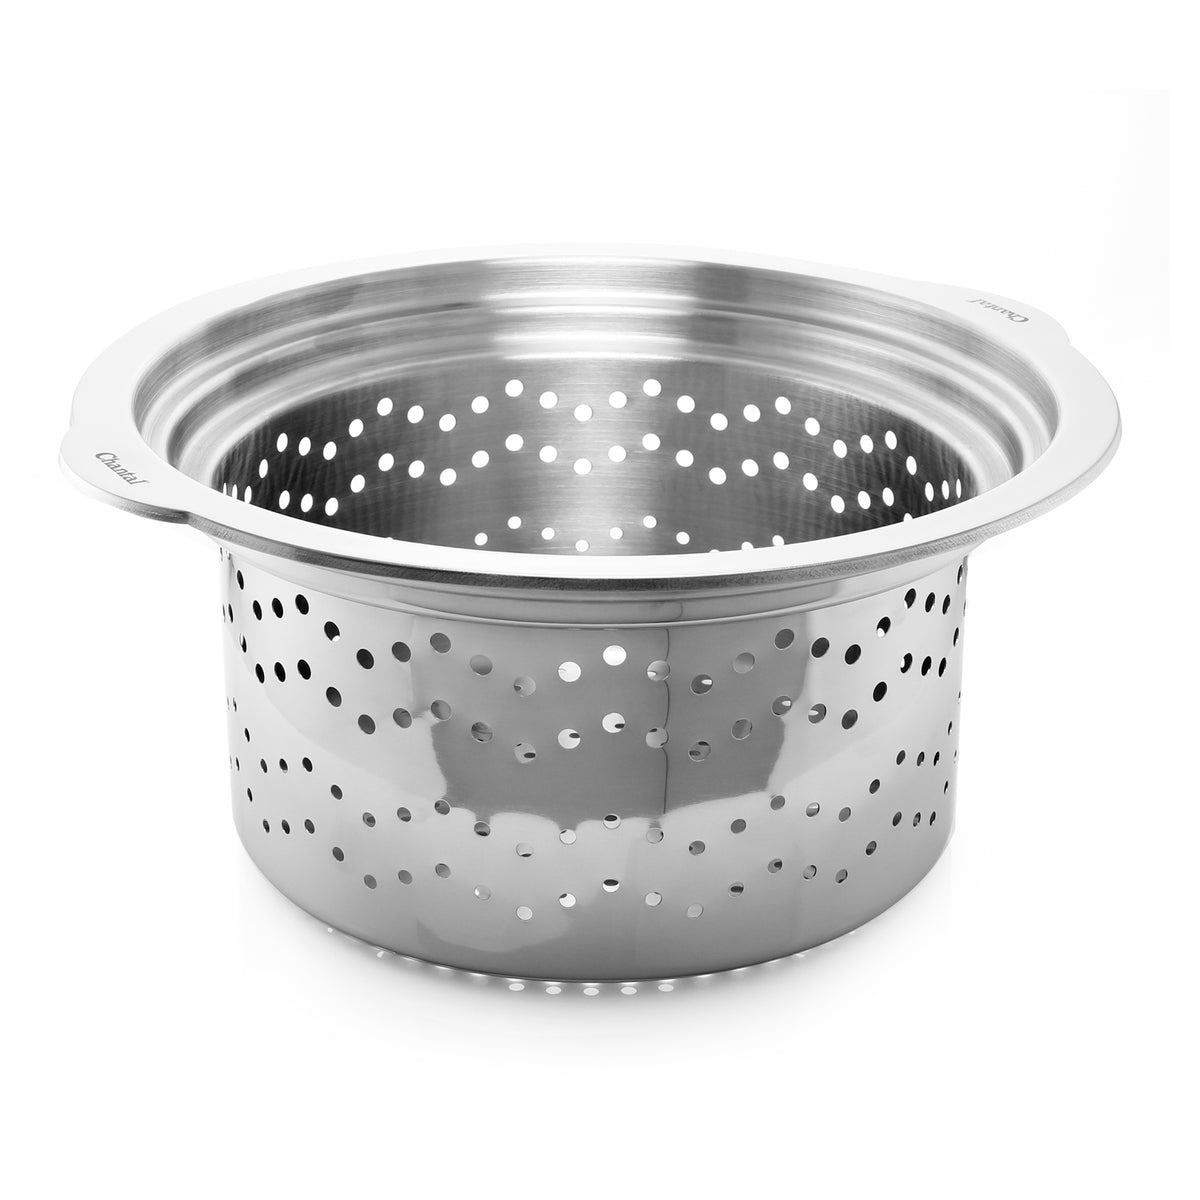 Stainless-Steel Steamer Basket